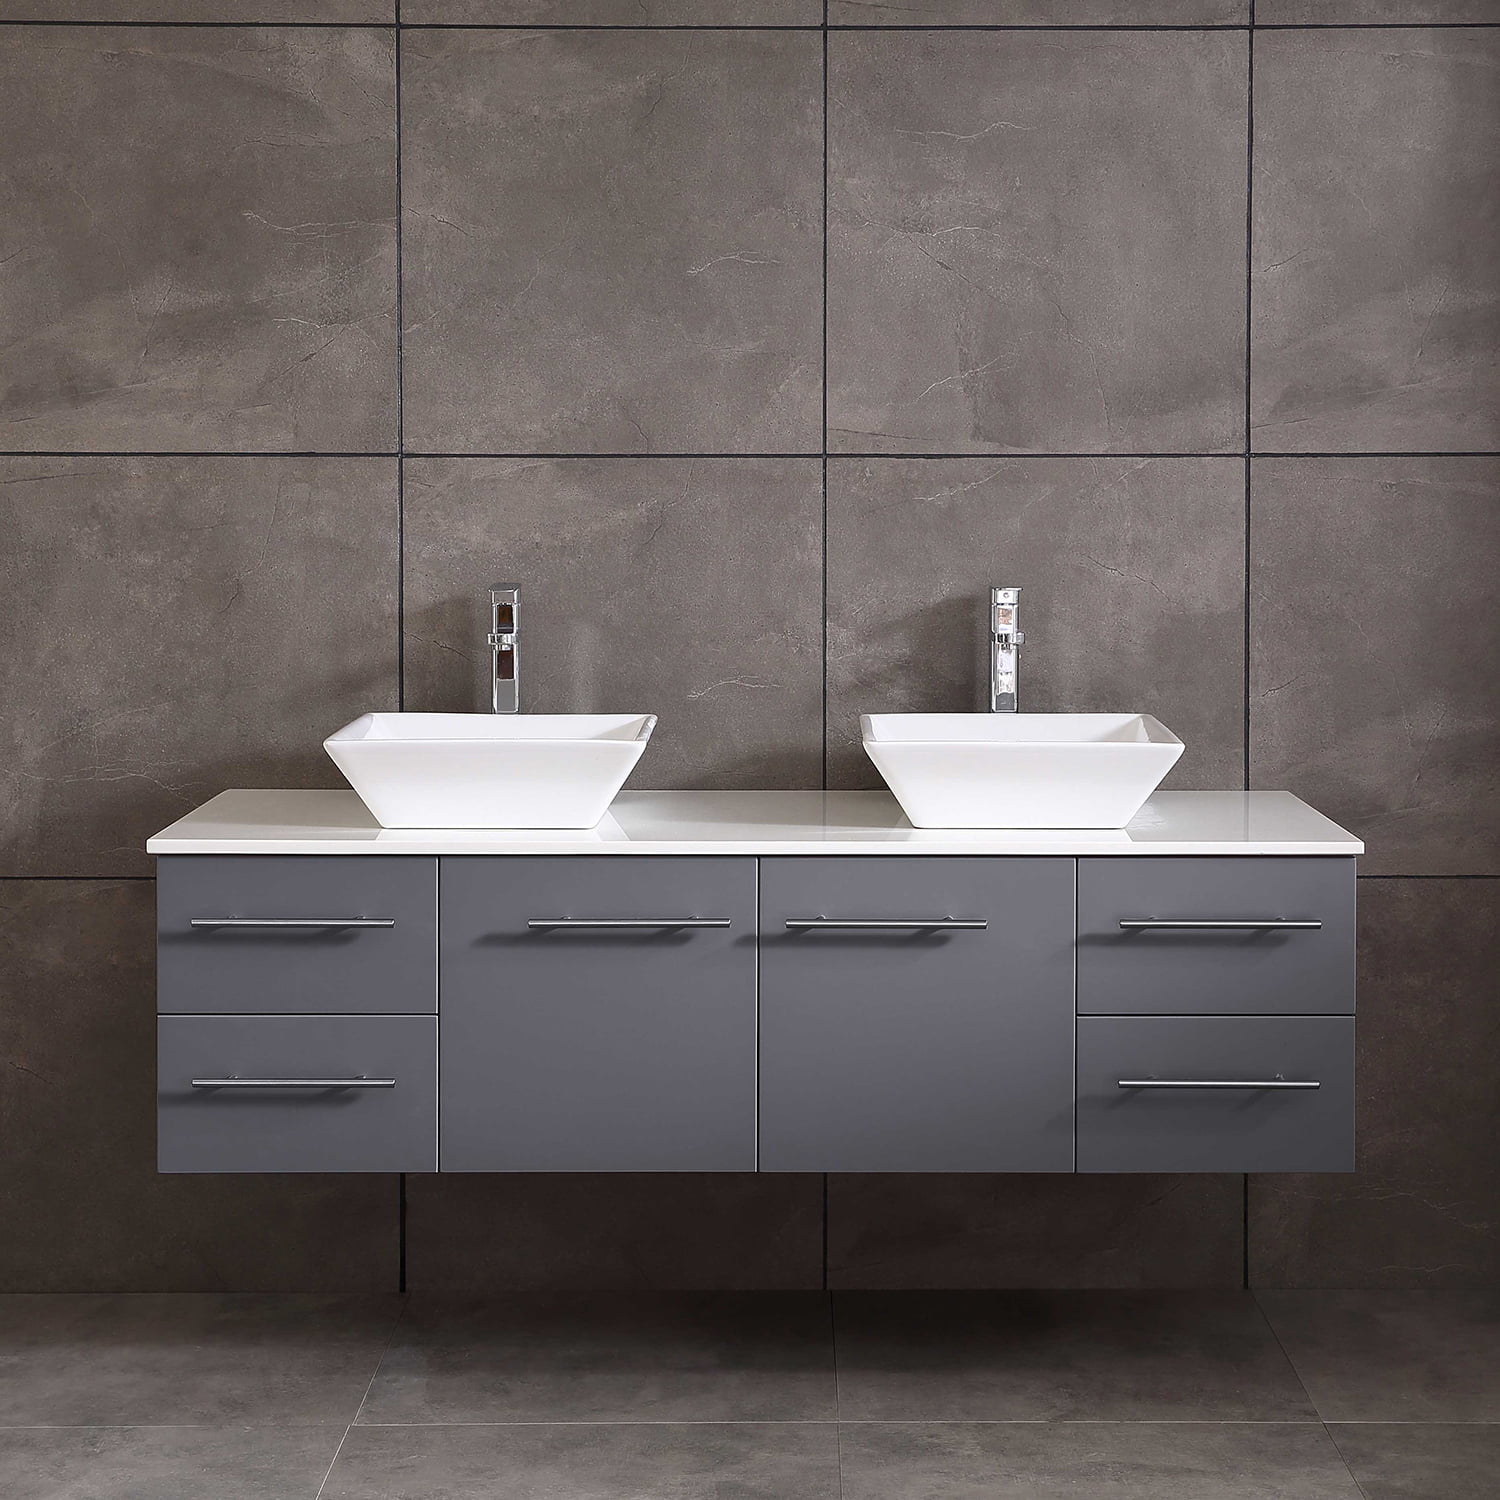 Double Sink Bathroom Vanity, 72 Inch Countertop With Double Sinks